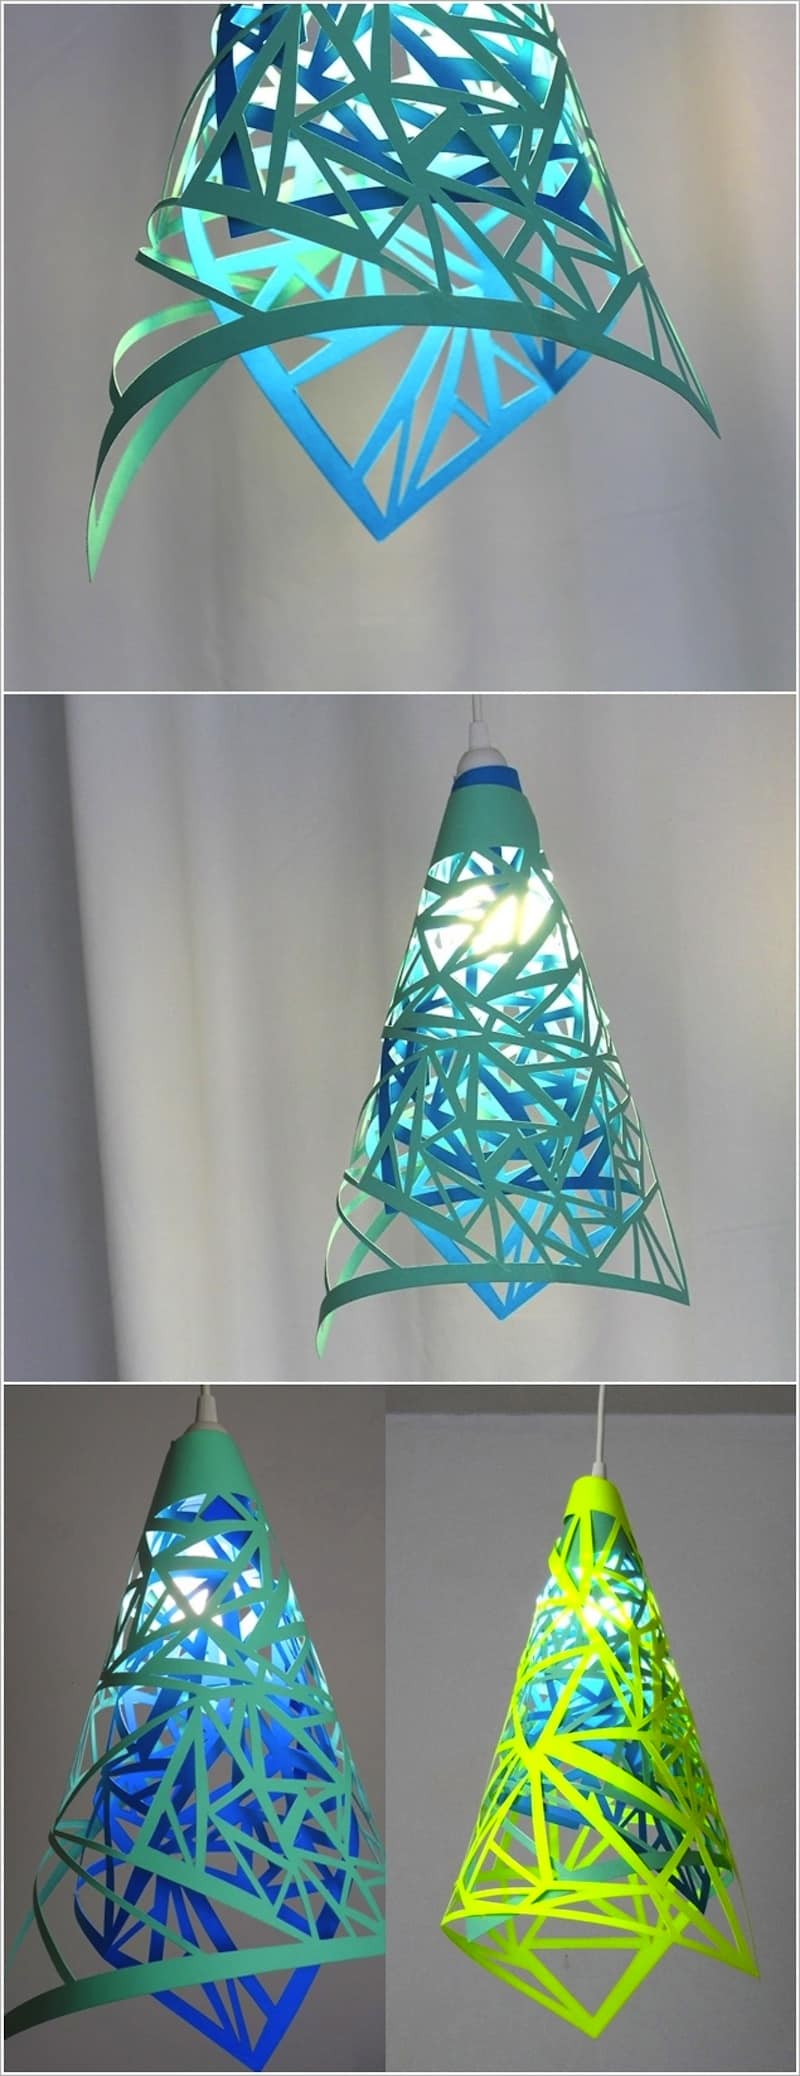 Cut paper pendant lights